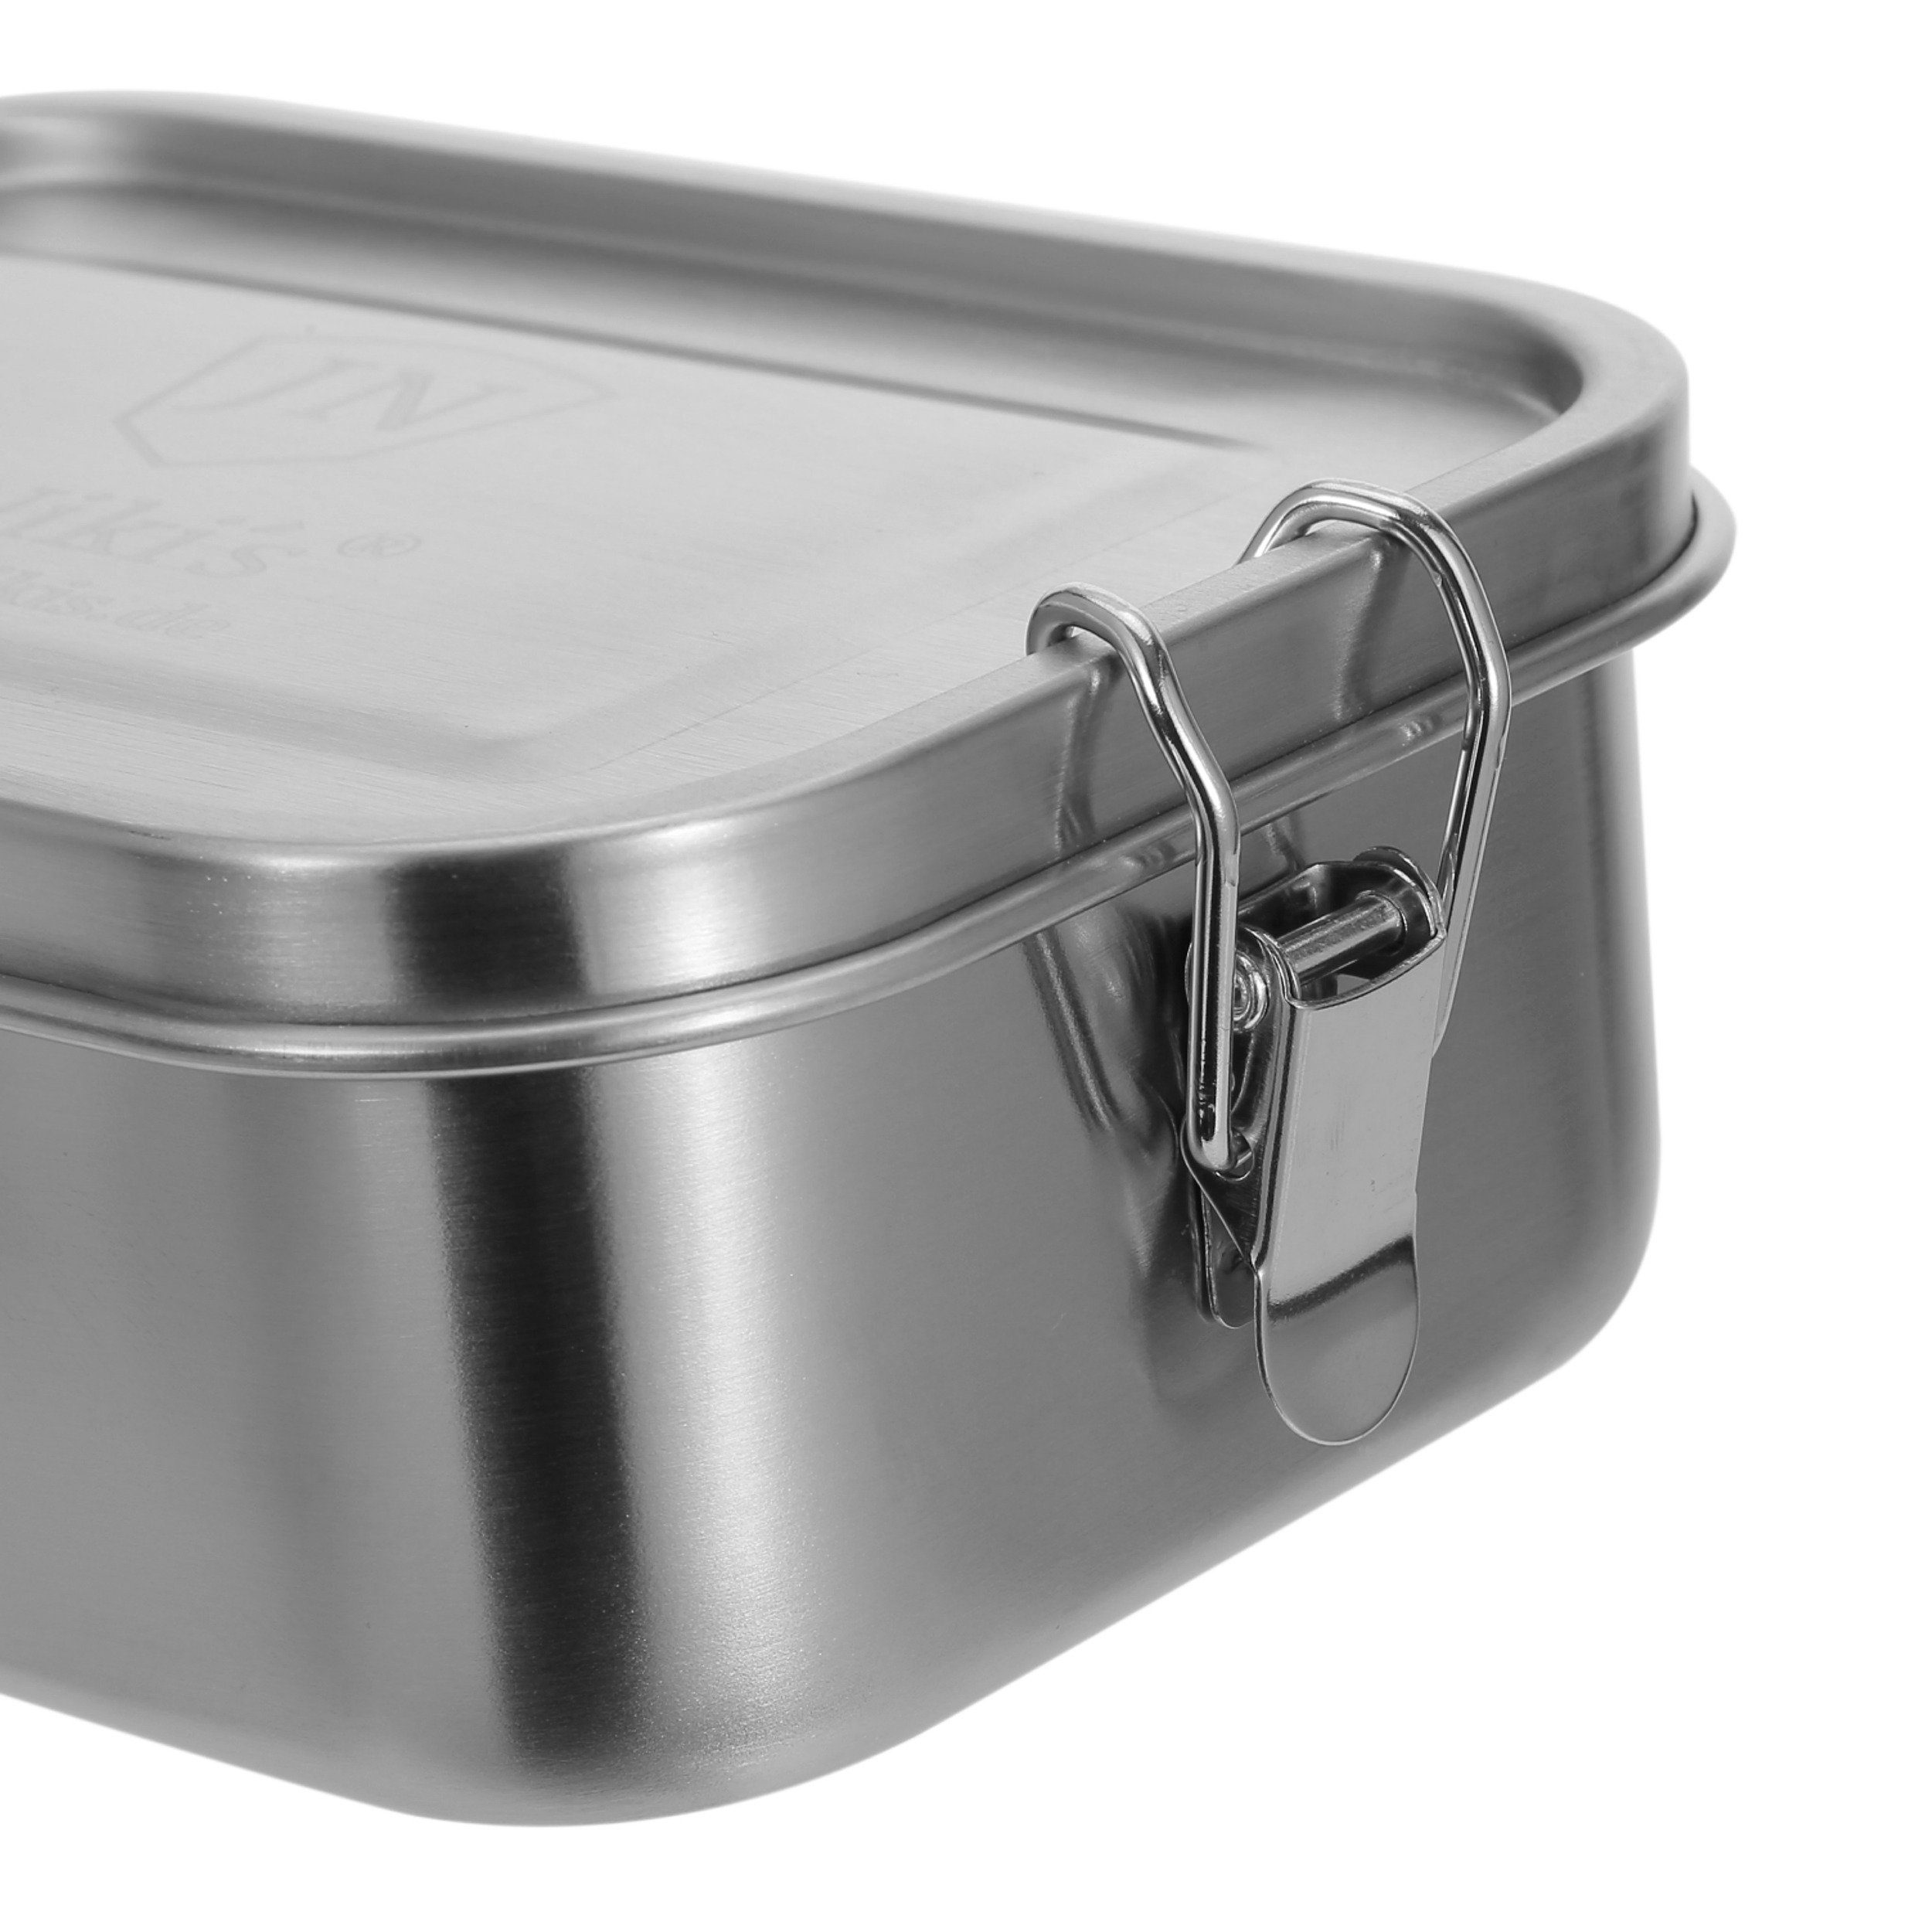 Teefilter JuNiki´s® isoliert JuNiki´s Edelstahl, Trinkflasche Premium-Schüler-Set Lunchbox 550ml JN Je + 2x Pink-Türkis aus Edelstahl, + Lunchbox 2er-Spar-Set: